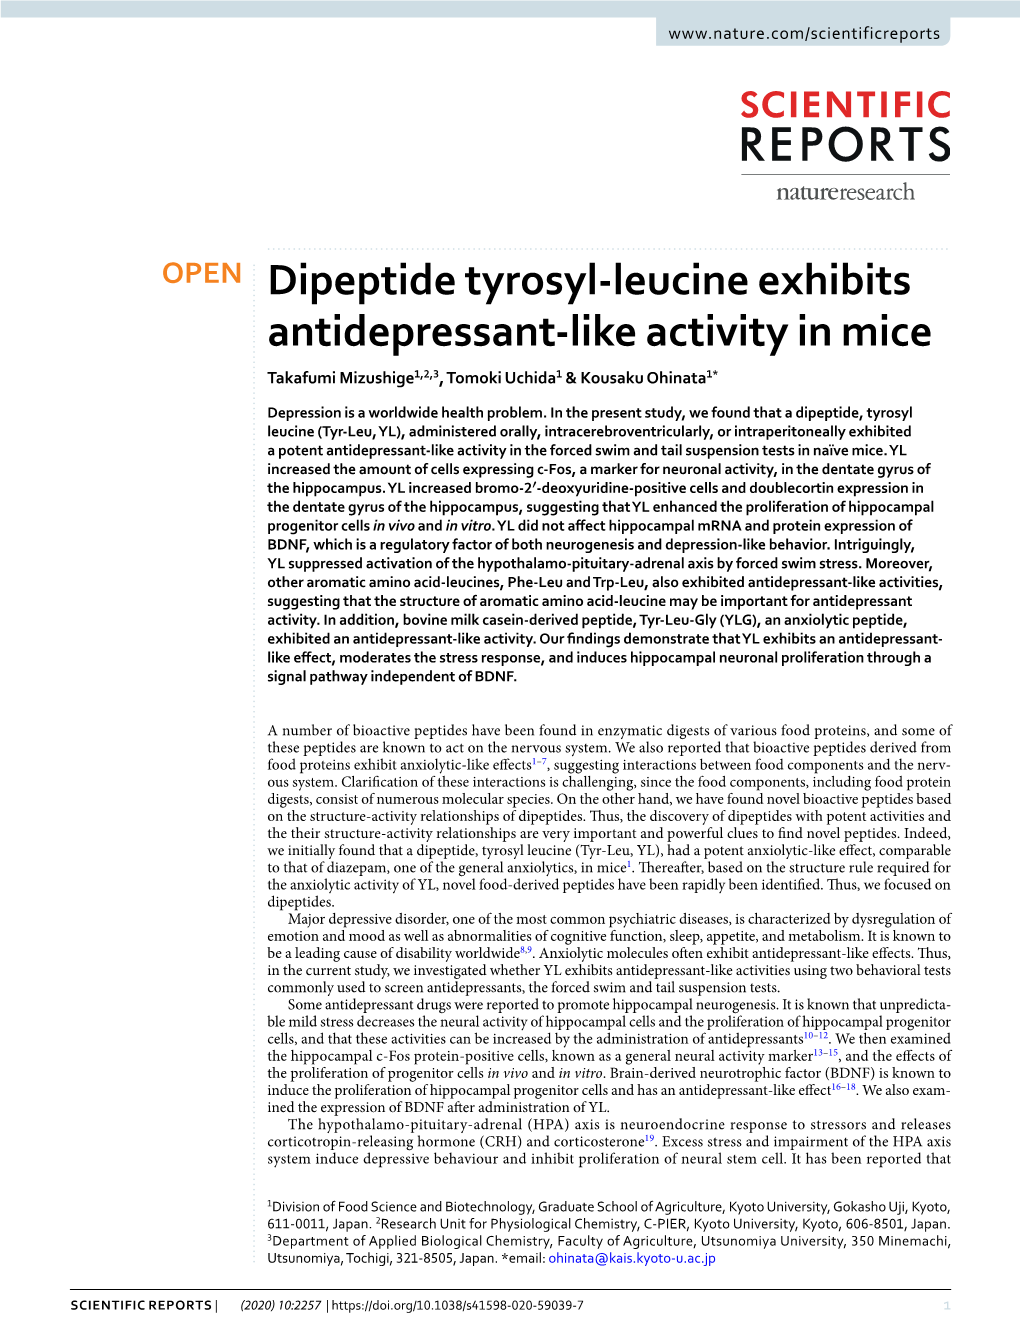 Dipeptide Tyrosyl-Leucine Exhibits Antidepressant-Like Activity in Mice Takafumi Mizushige1,2,3, Tomoki Uchida1 & Kousaku Ohinata1*